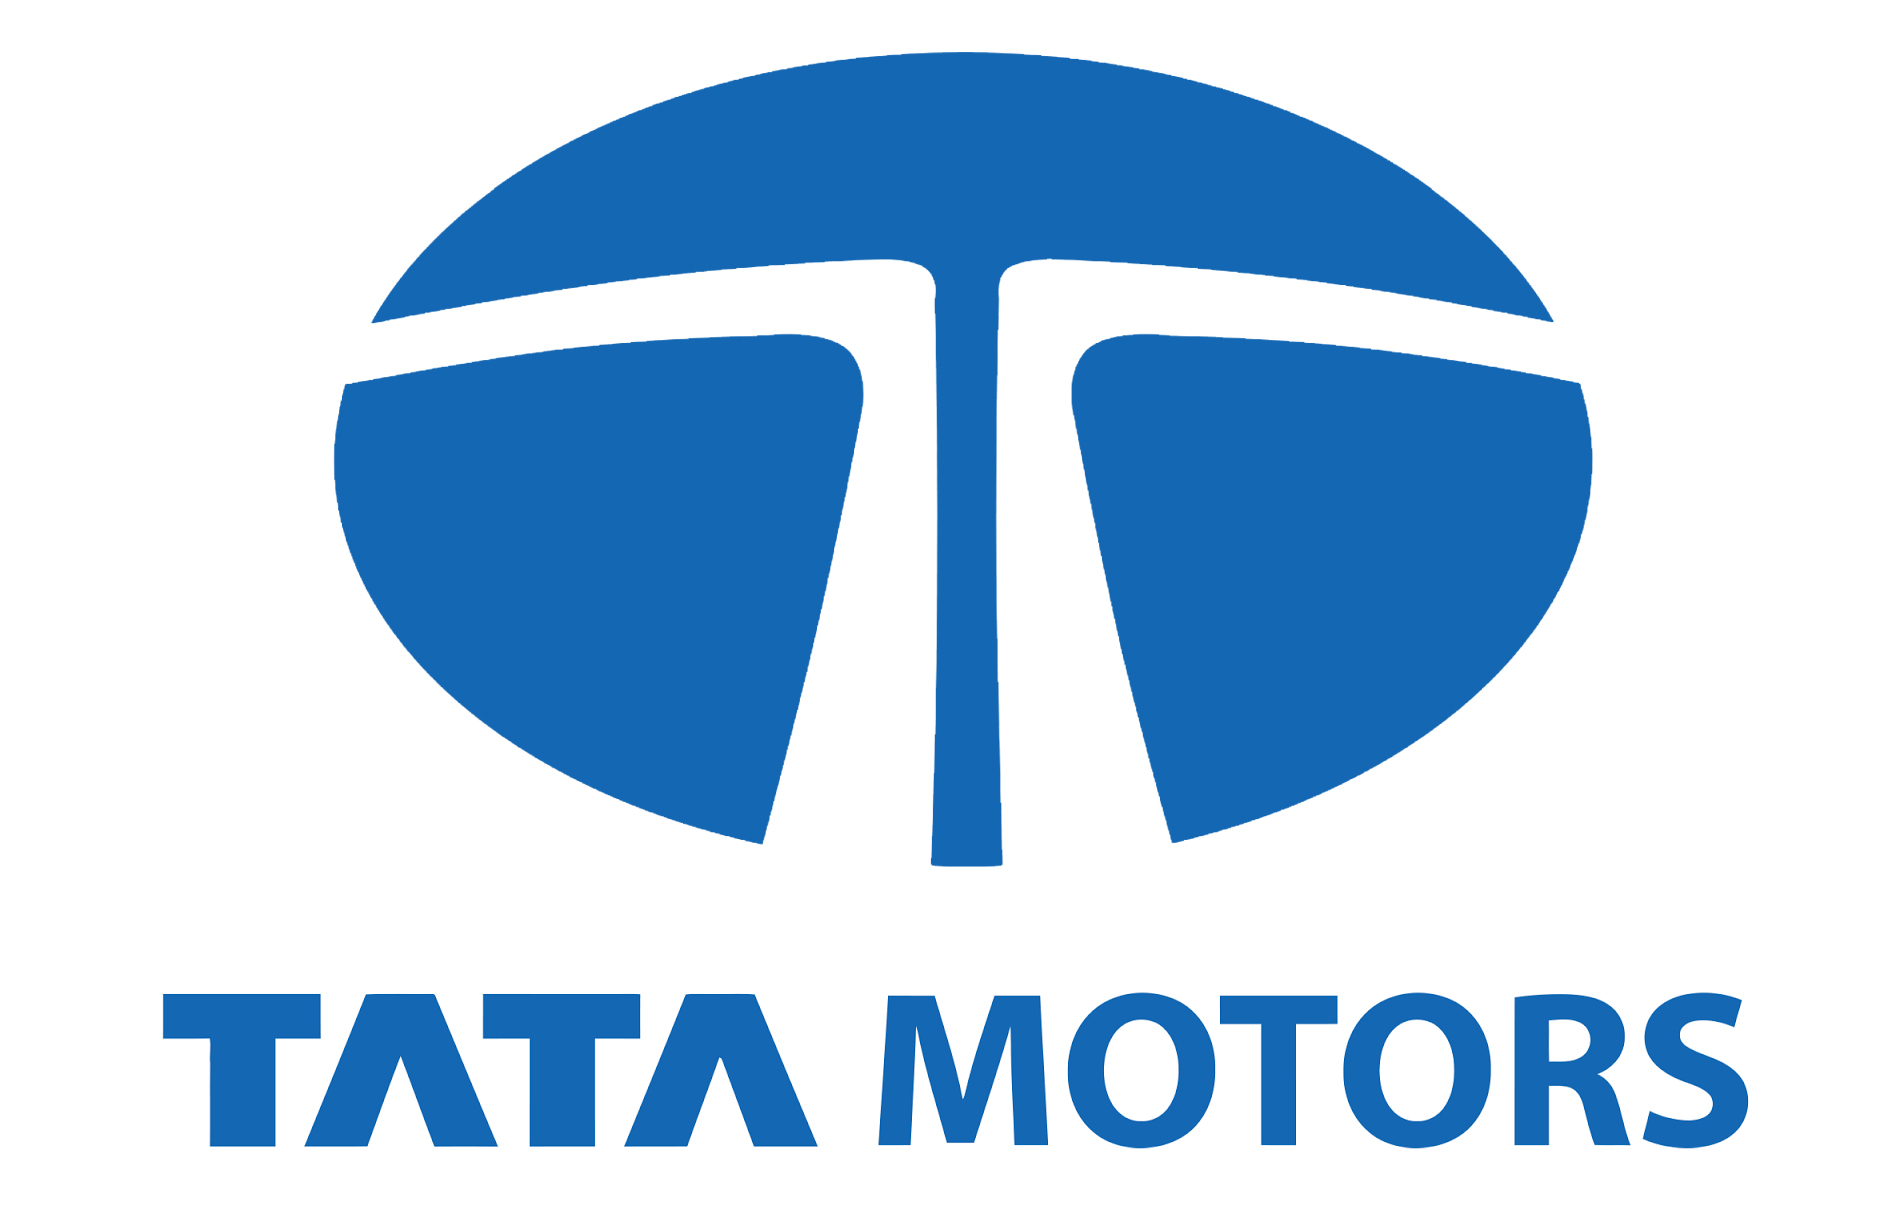 Tata Motors Cars Showroom - SS Cars - Logo